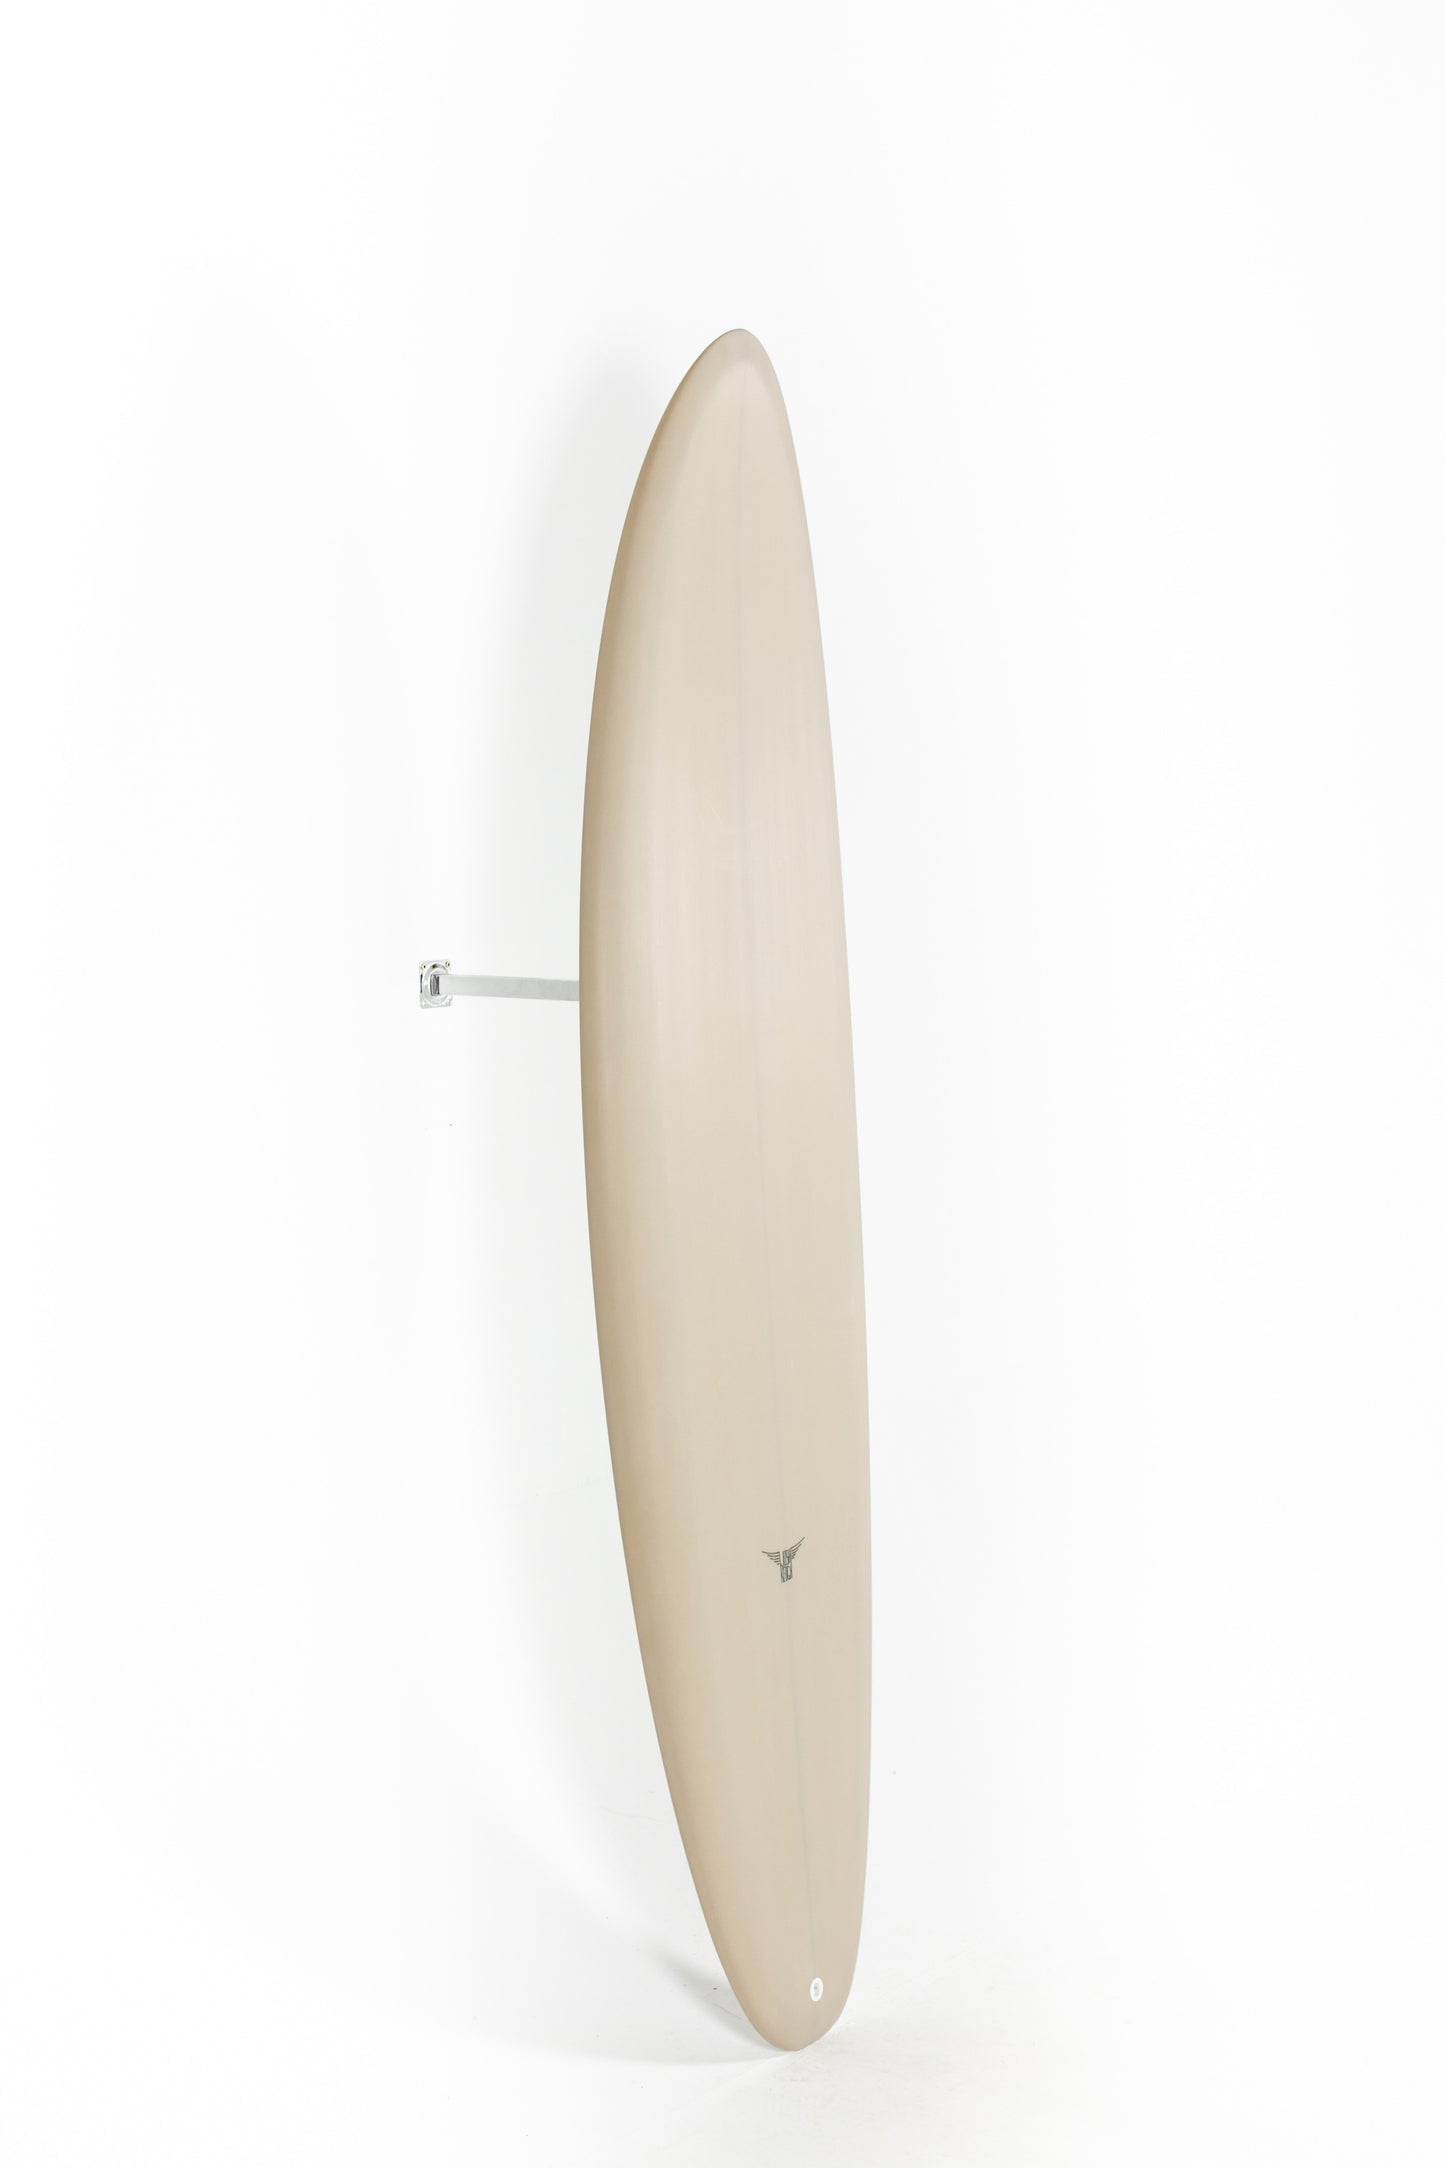 
                  
                    Pukas Surf Shop_Joshua Keogh Surfboard - LIBERATOR SINGLE by Joshua Keogh - 6'8" x 21 x 2 9/16 - LIBERATOR68
                  
                